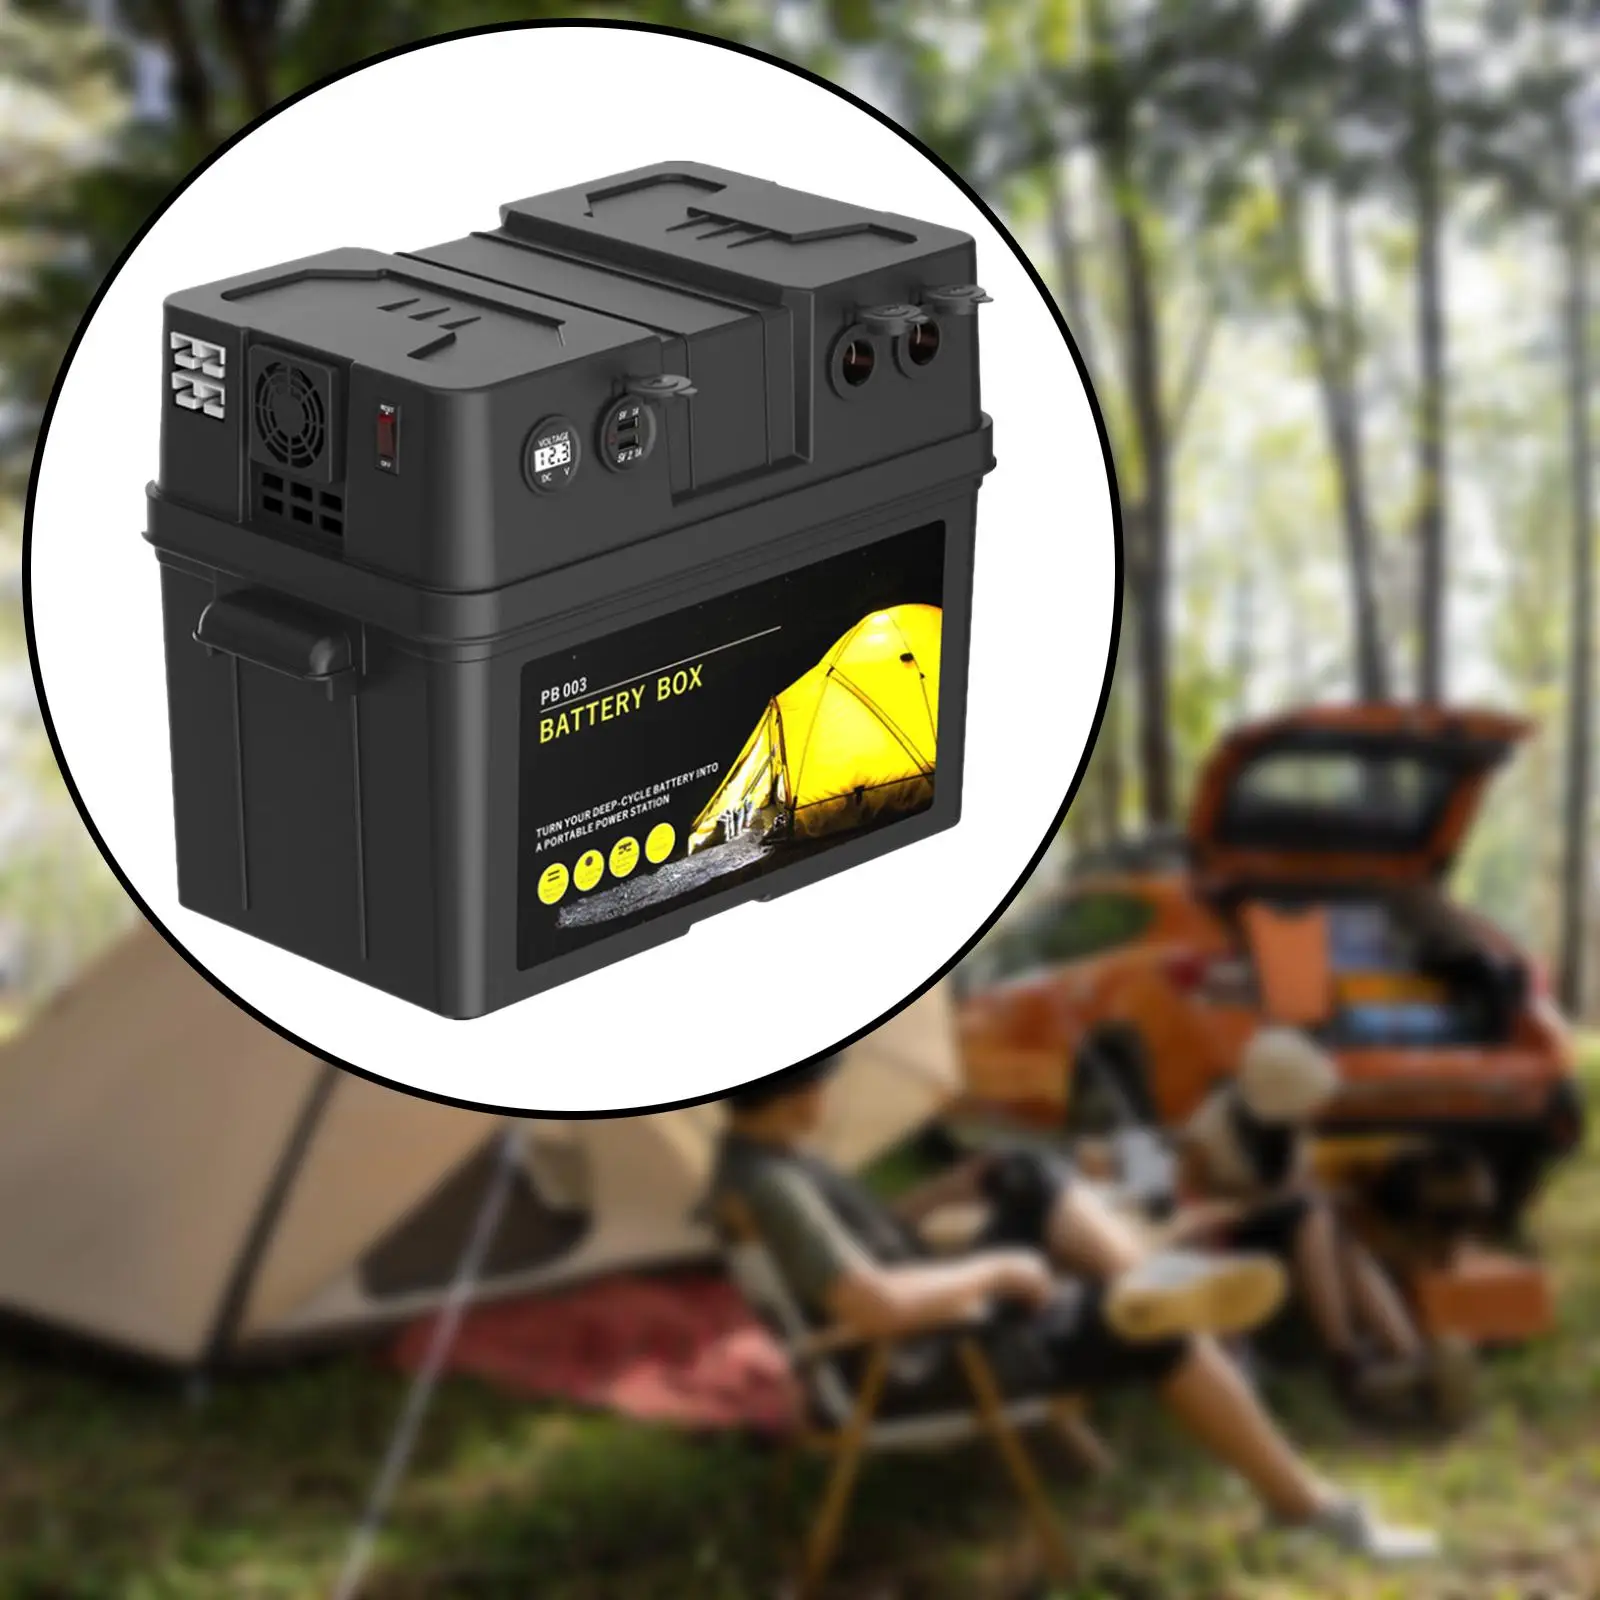 Batteries Carrier Portable Power Center Station 12 V Heavy Duty Motor Battery Box for Camping Truck Travel SUV Trailer